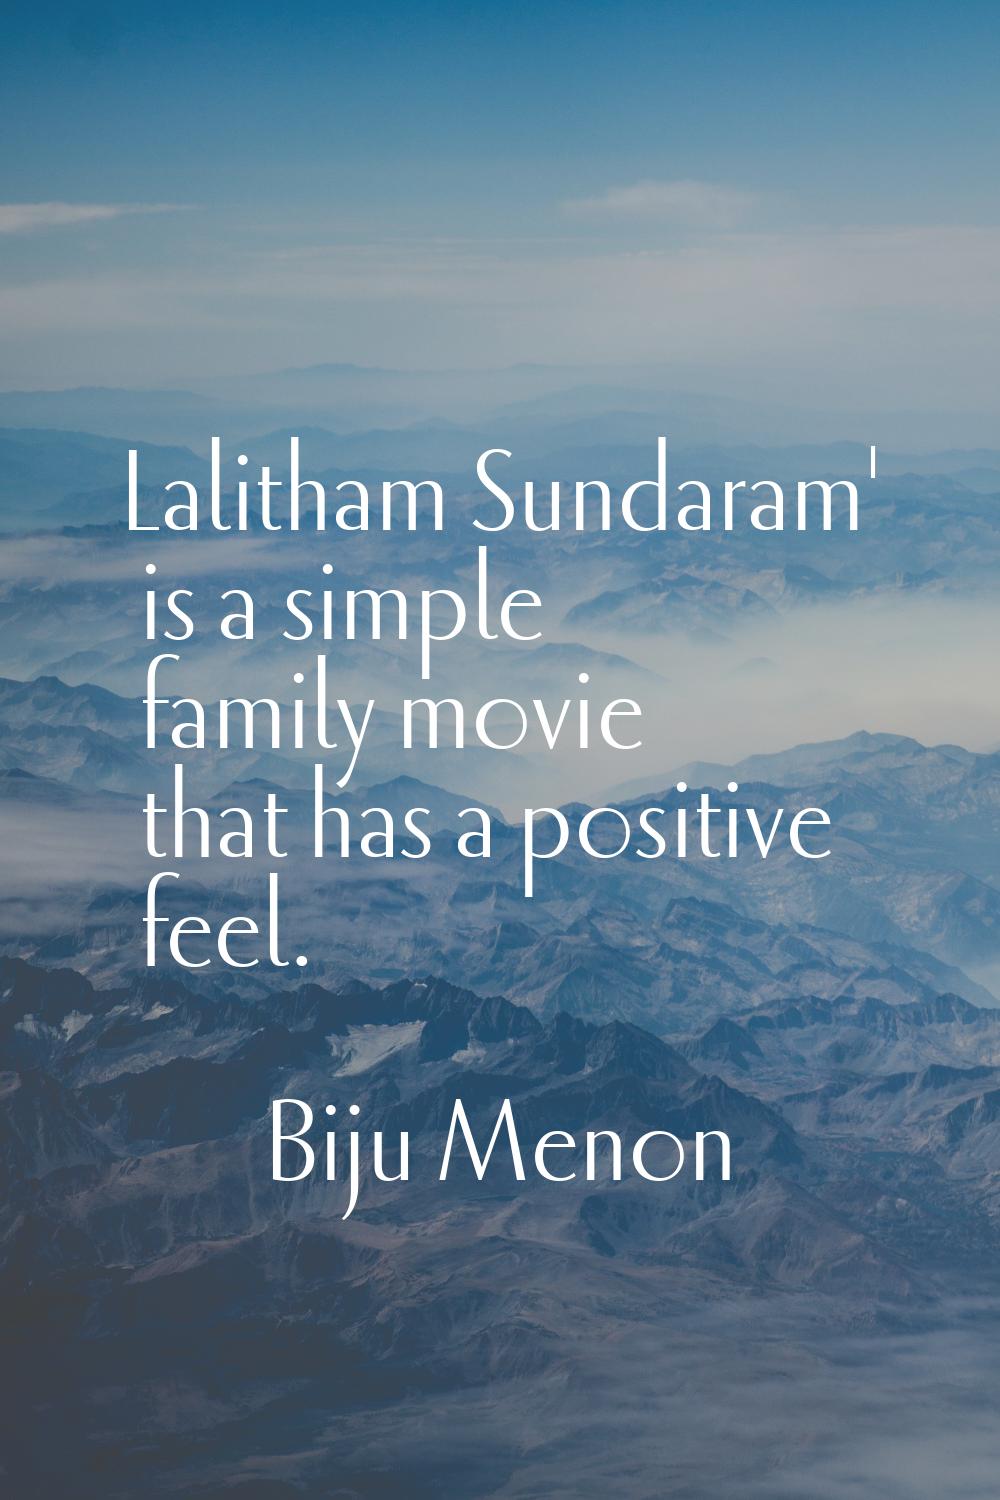 Lalitham Sundaram' is a simple family movie that has a positive feel.